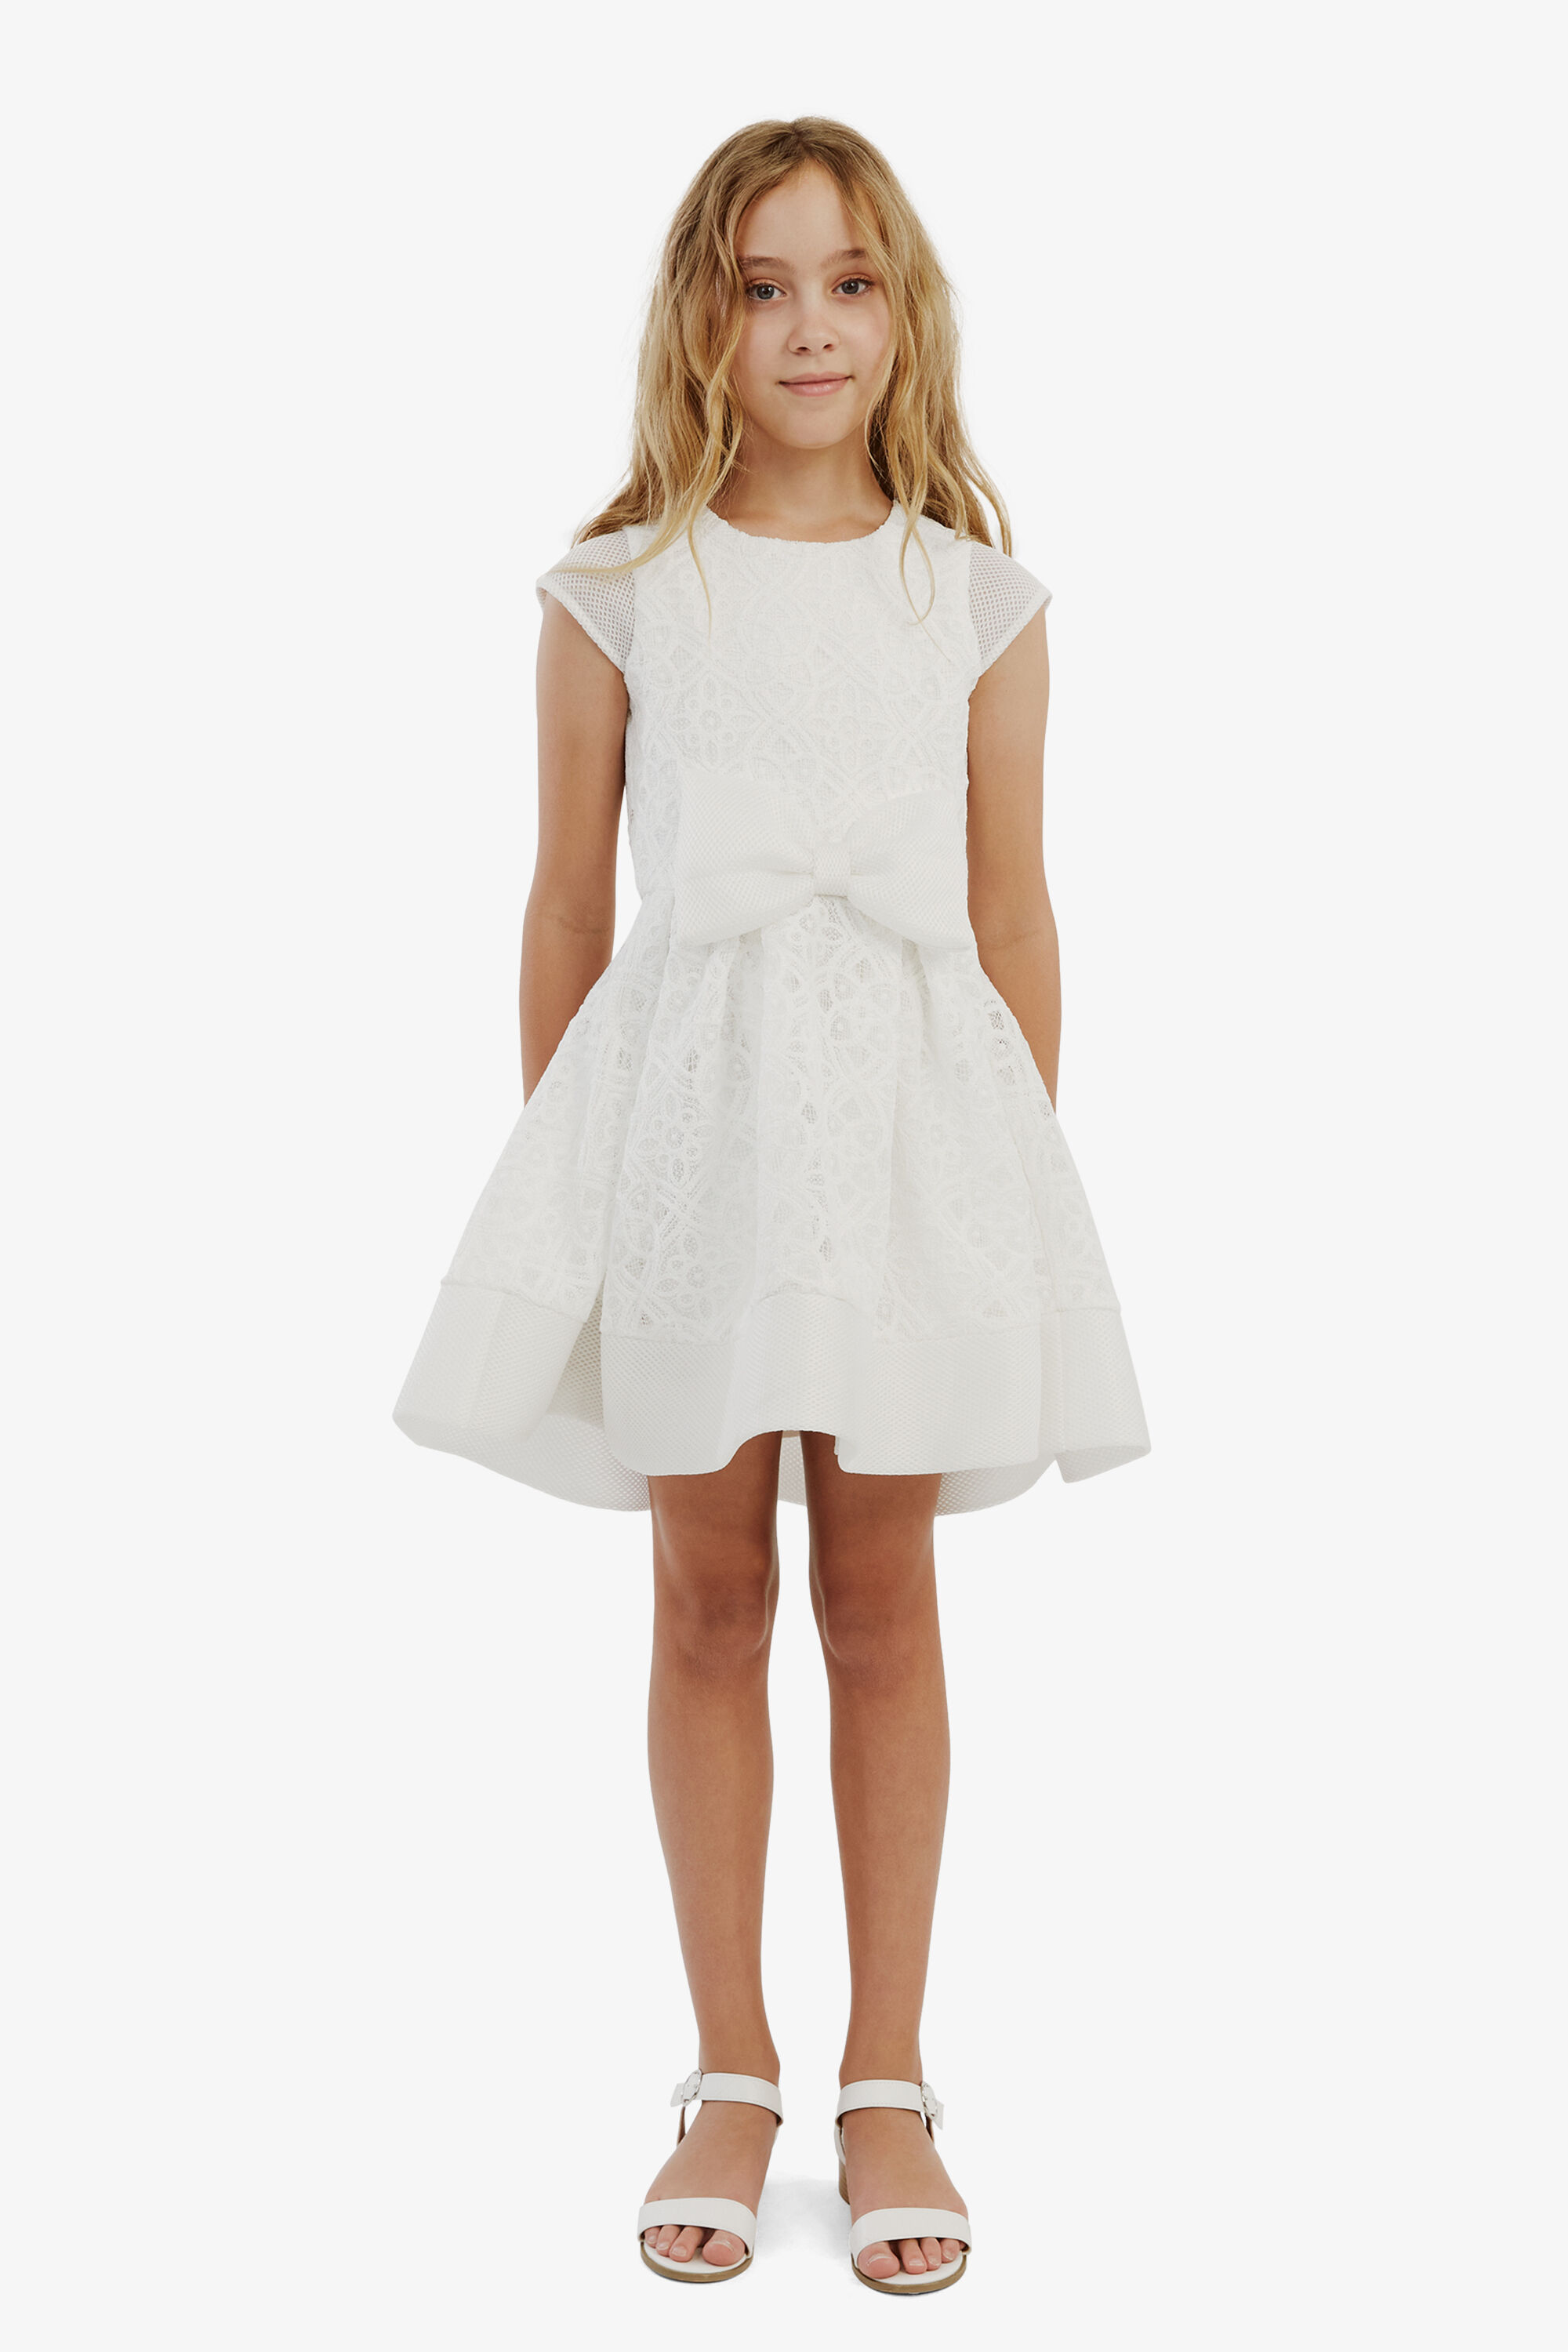 white junior dresses